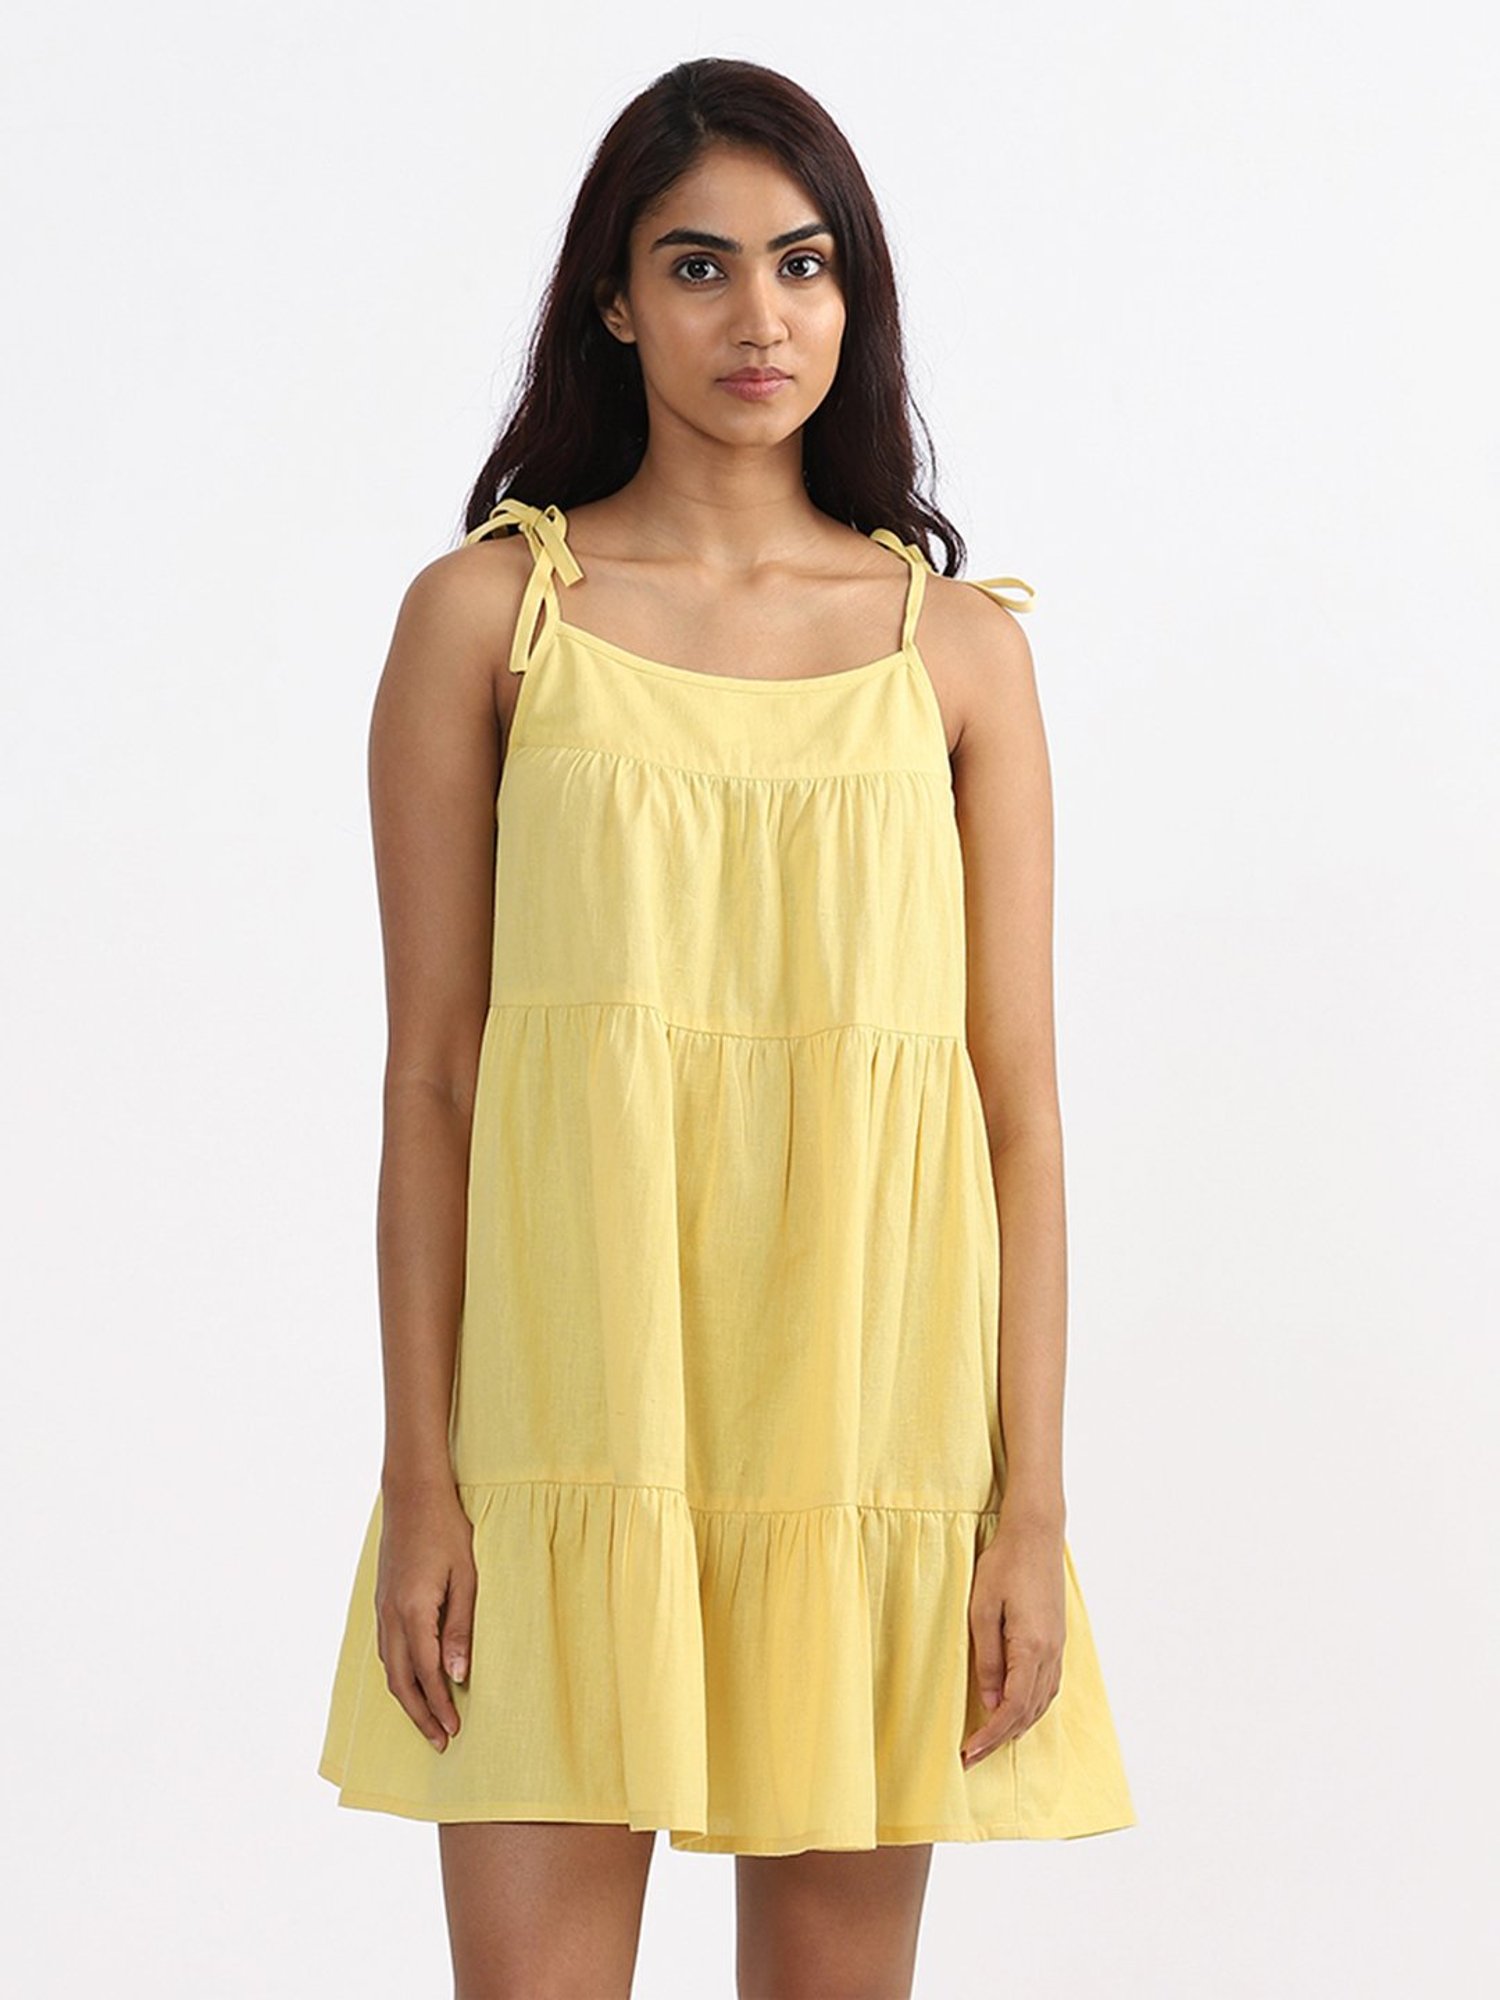 Wunderlove by Westside Plain Yellow Swimwear Cover Up Dress